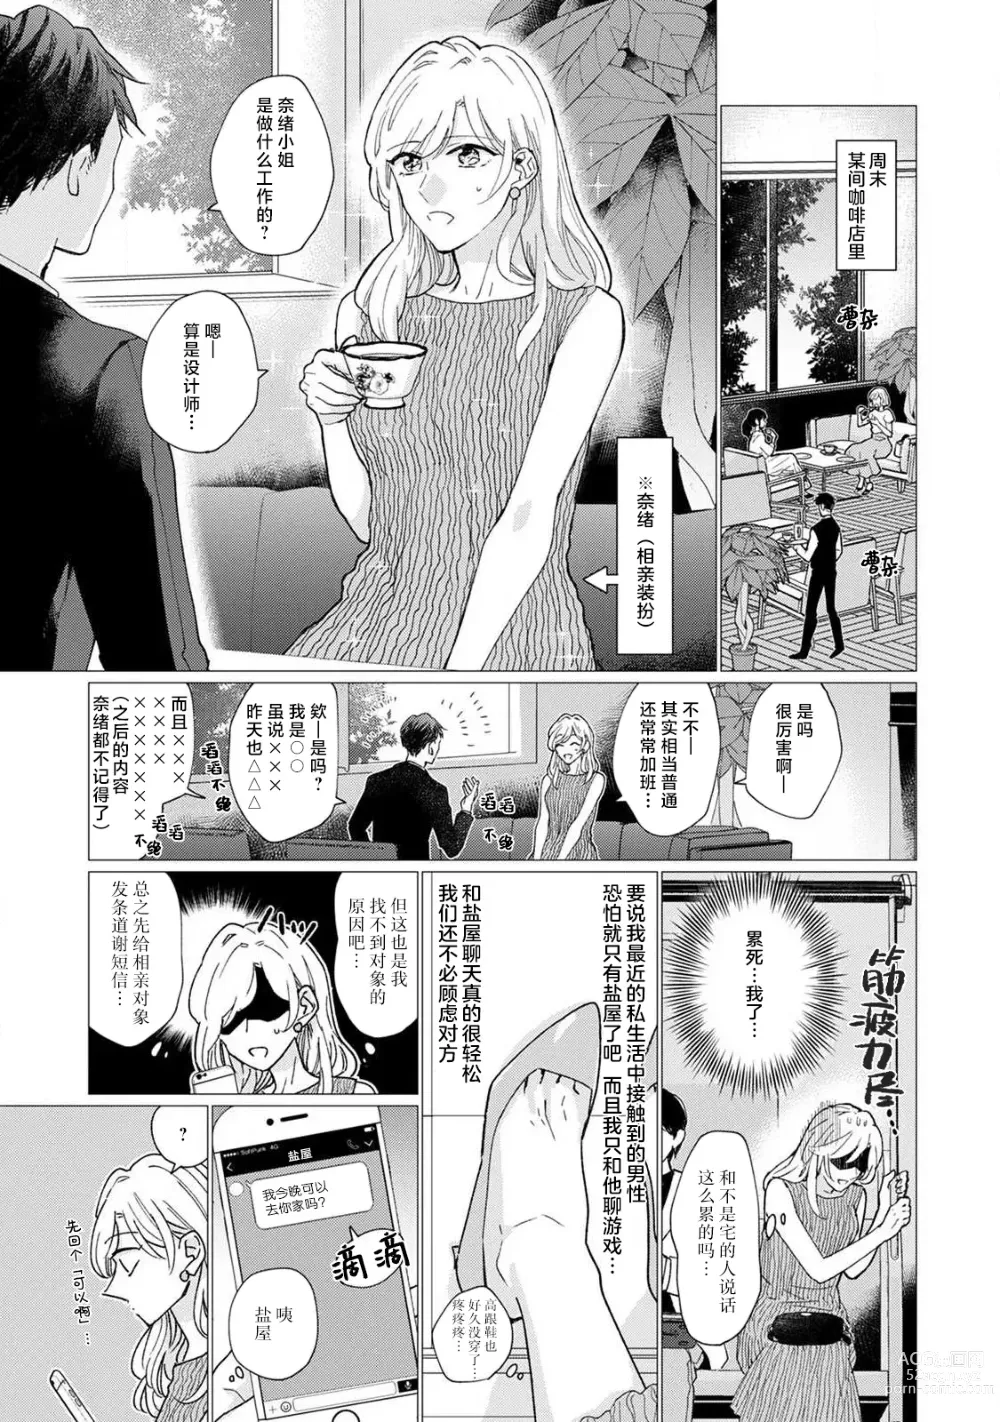 Page 16 of manga 猫系gamer男子喜欢我